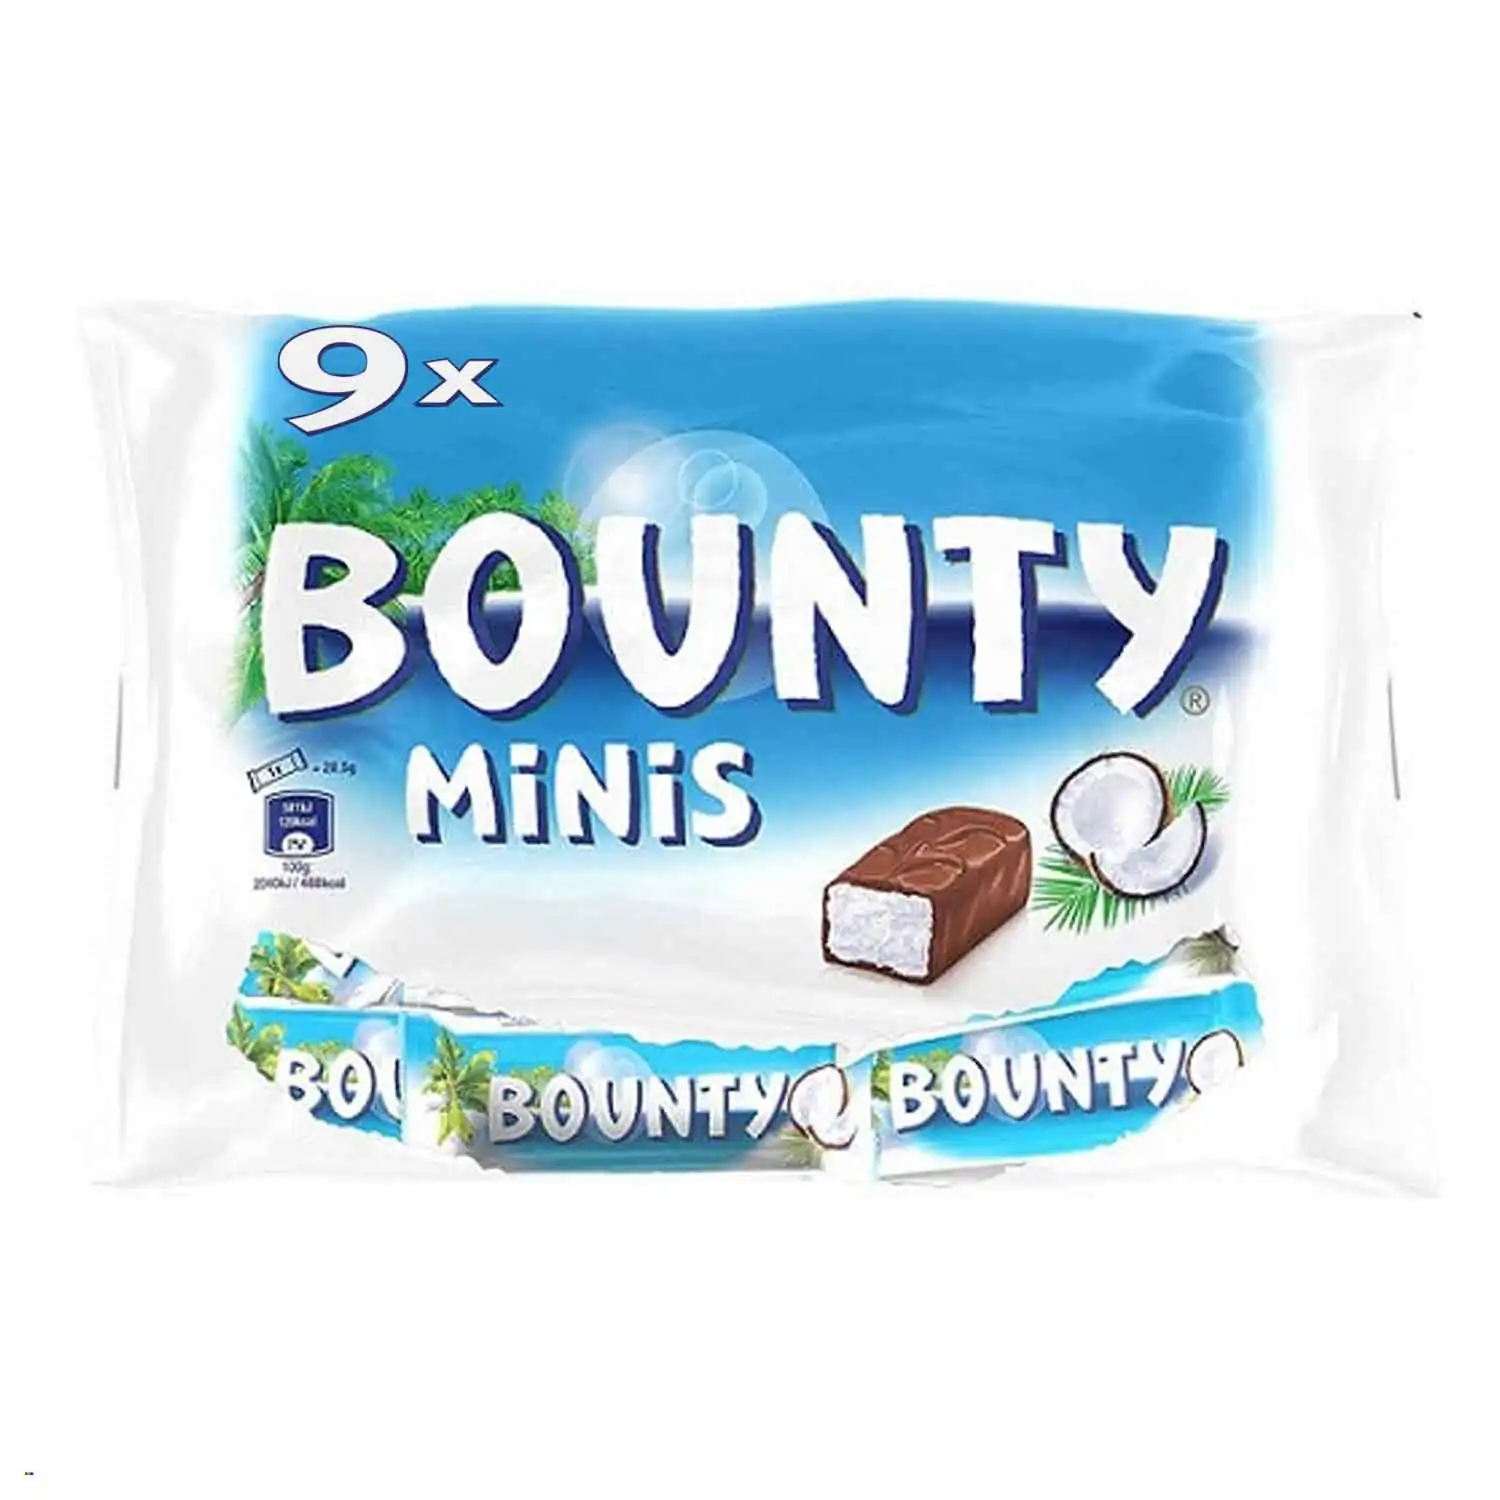 Bounty minis 275g